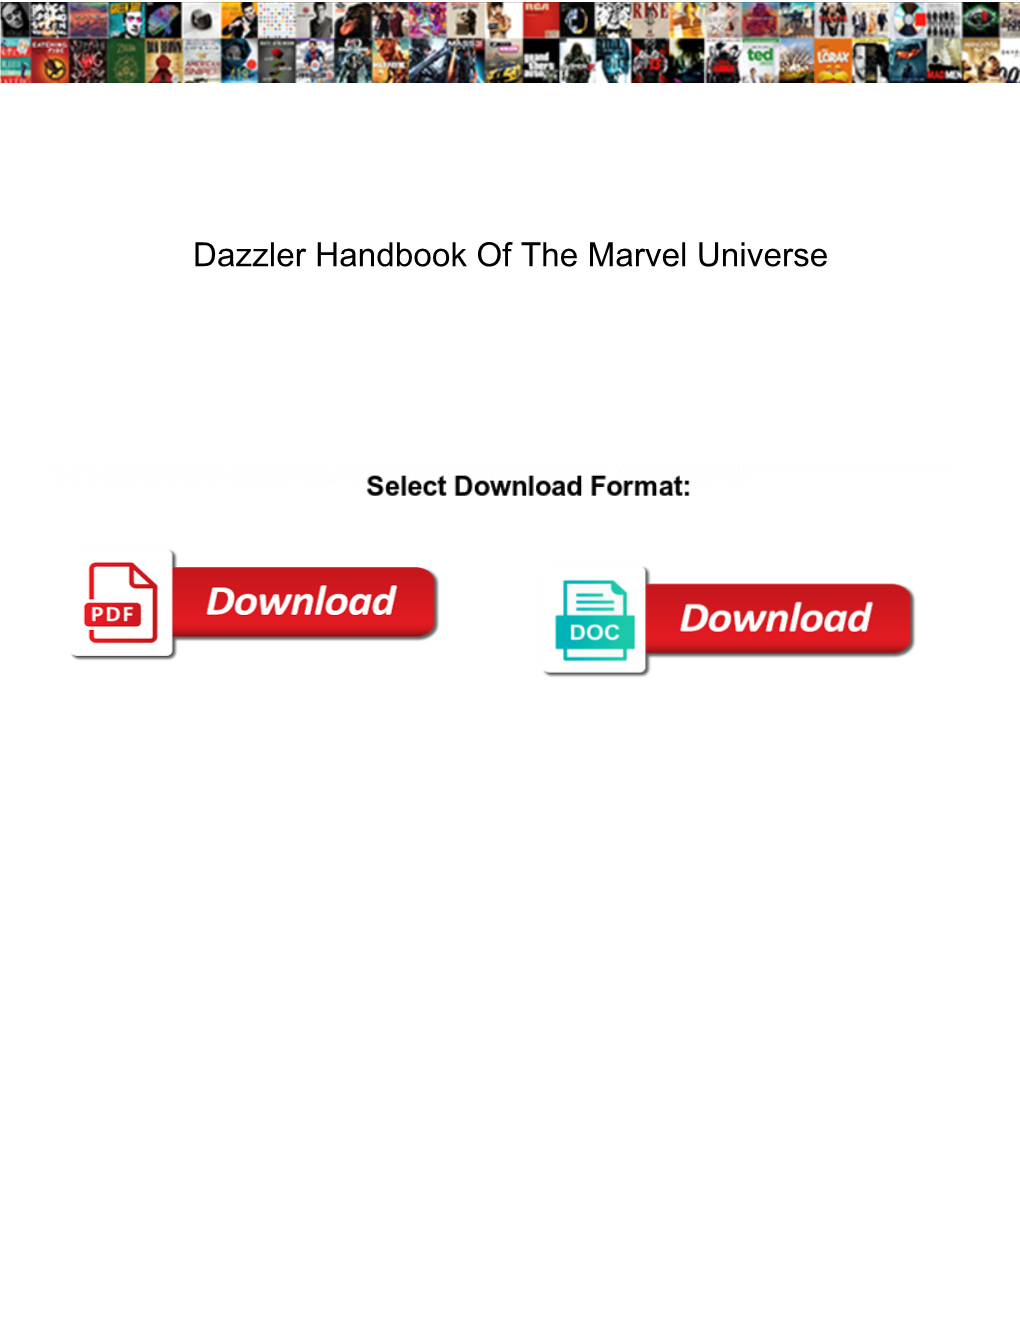 Dazzler Handbook of the Marvel Universe